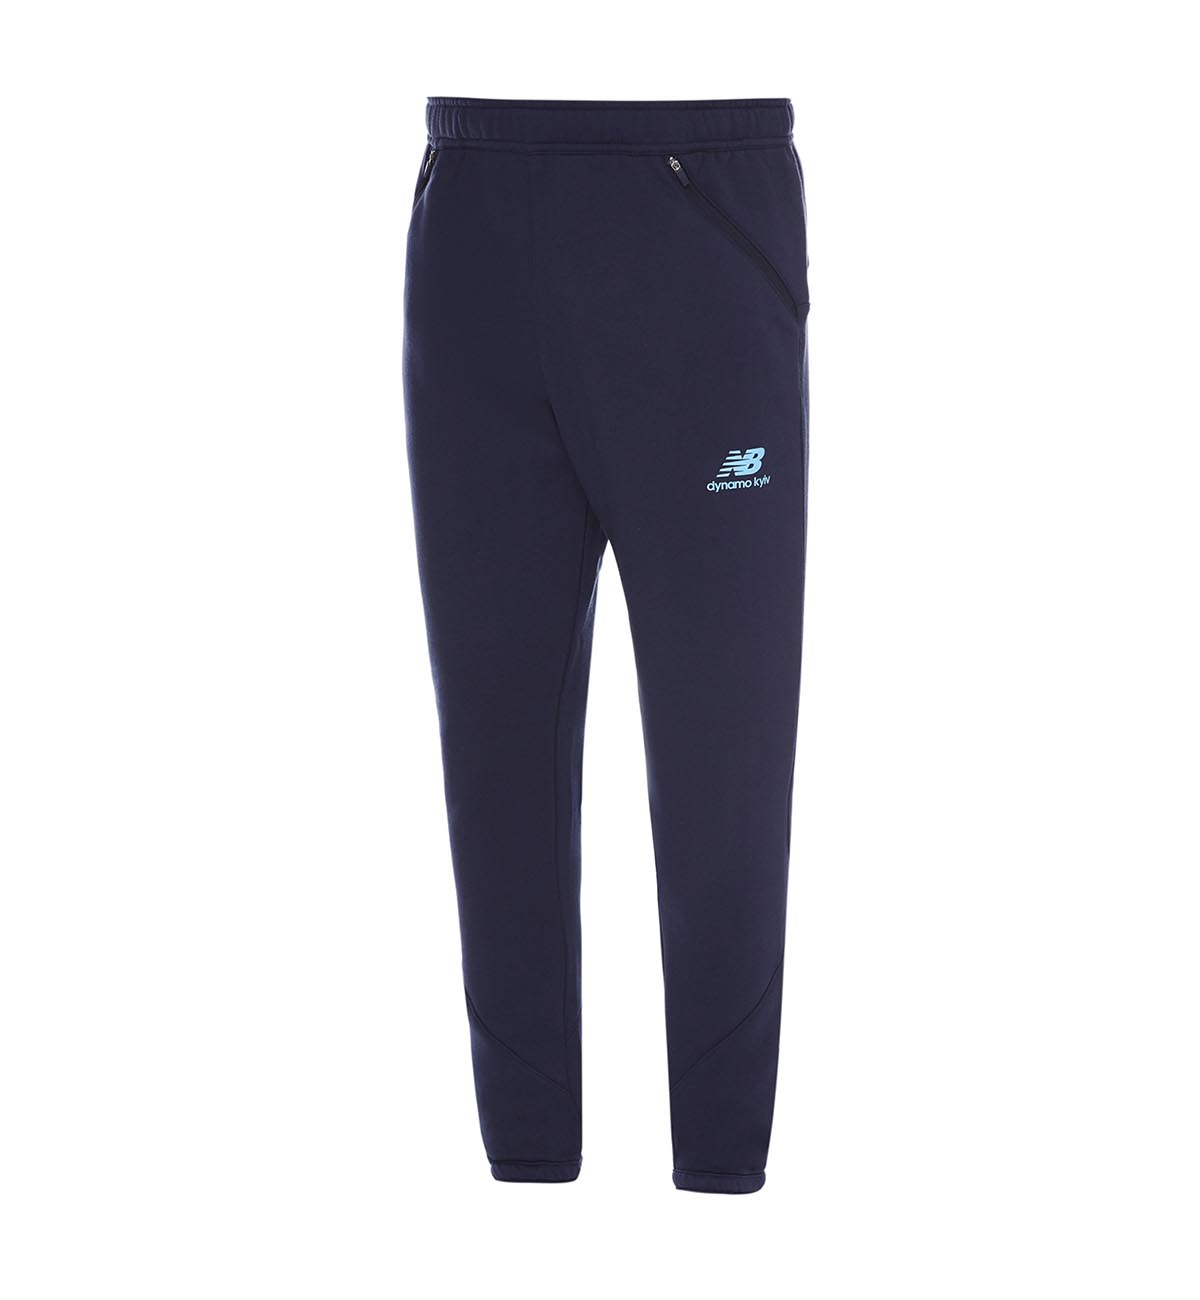 FCDK navy blue winter sport pants